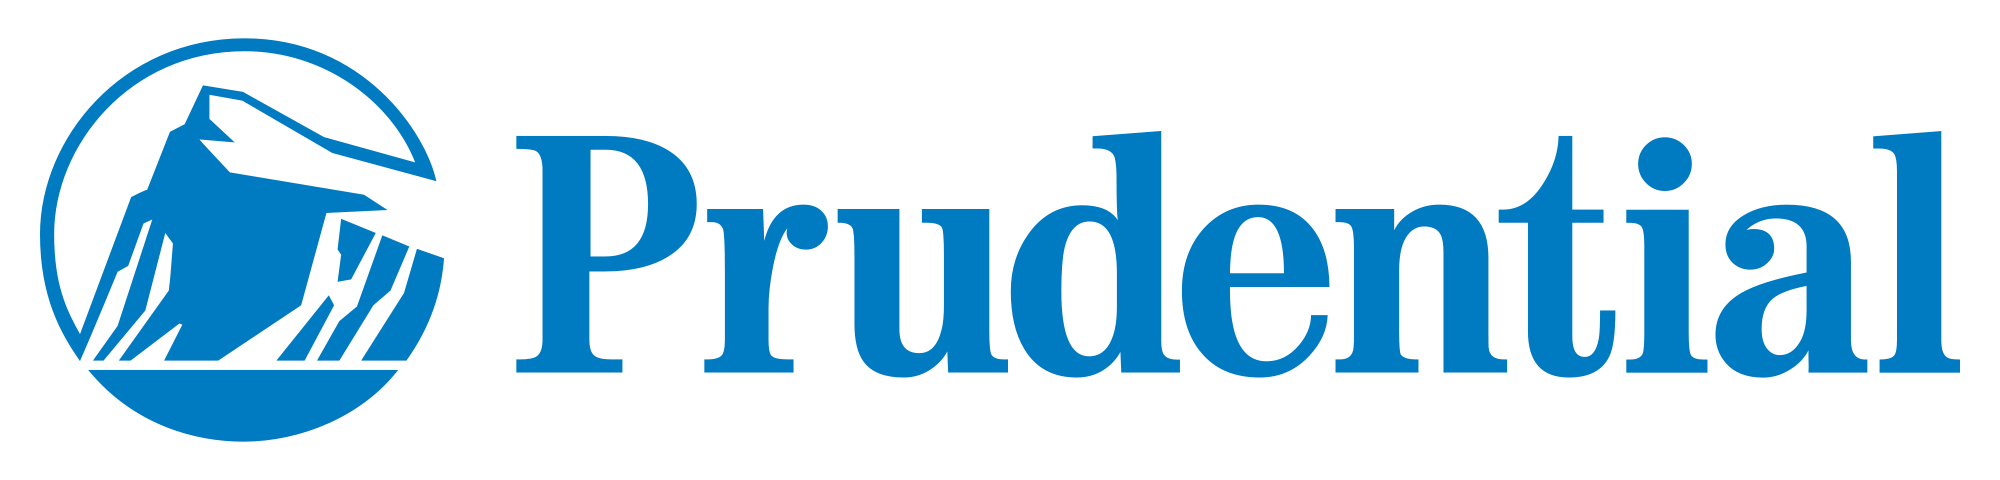 prudential financial logo